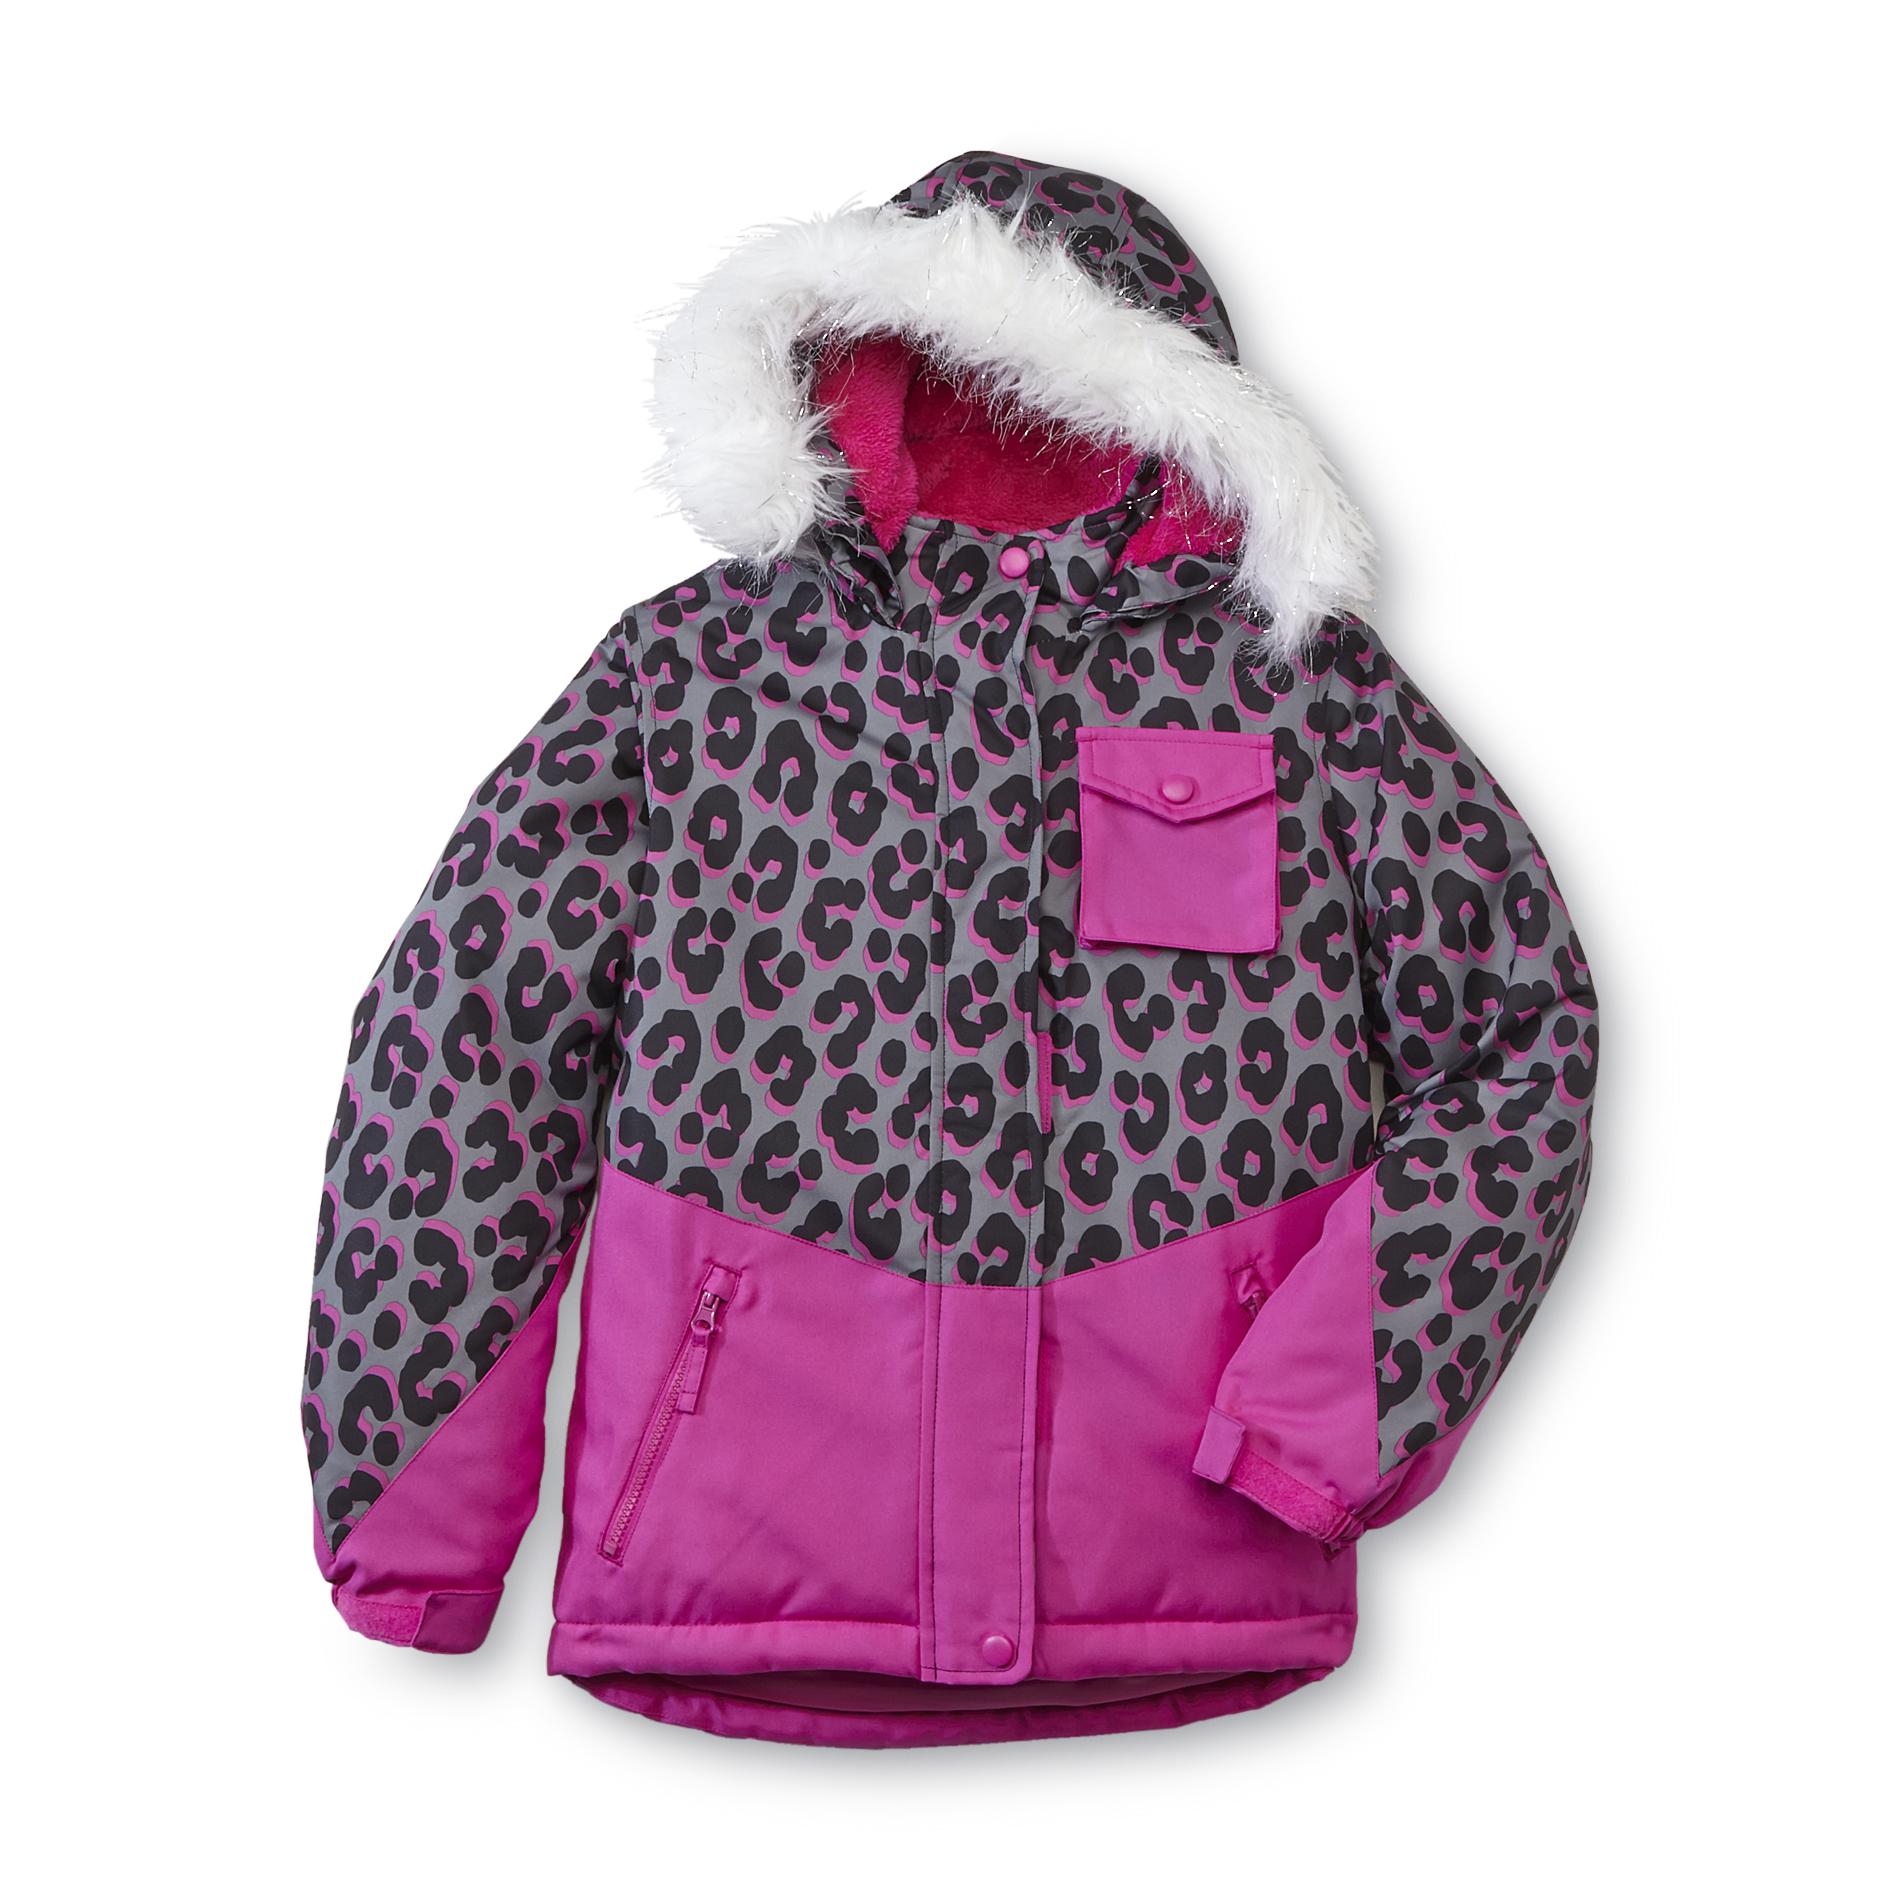 Athletech Girl's Hooded Snowboard Jacket - Leopard Print